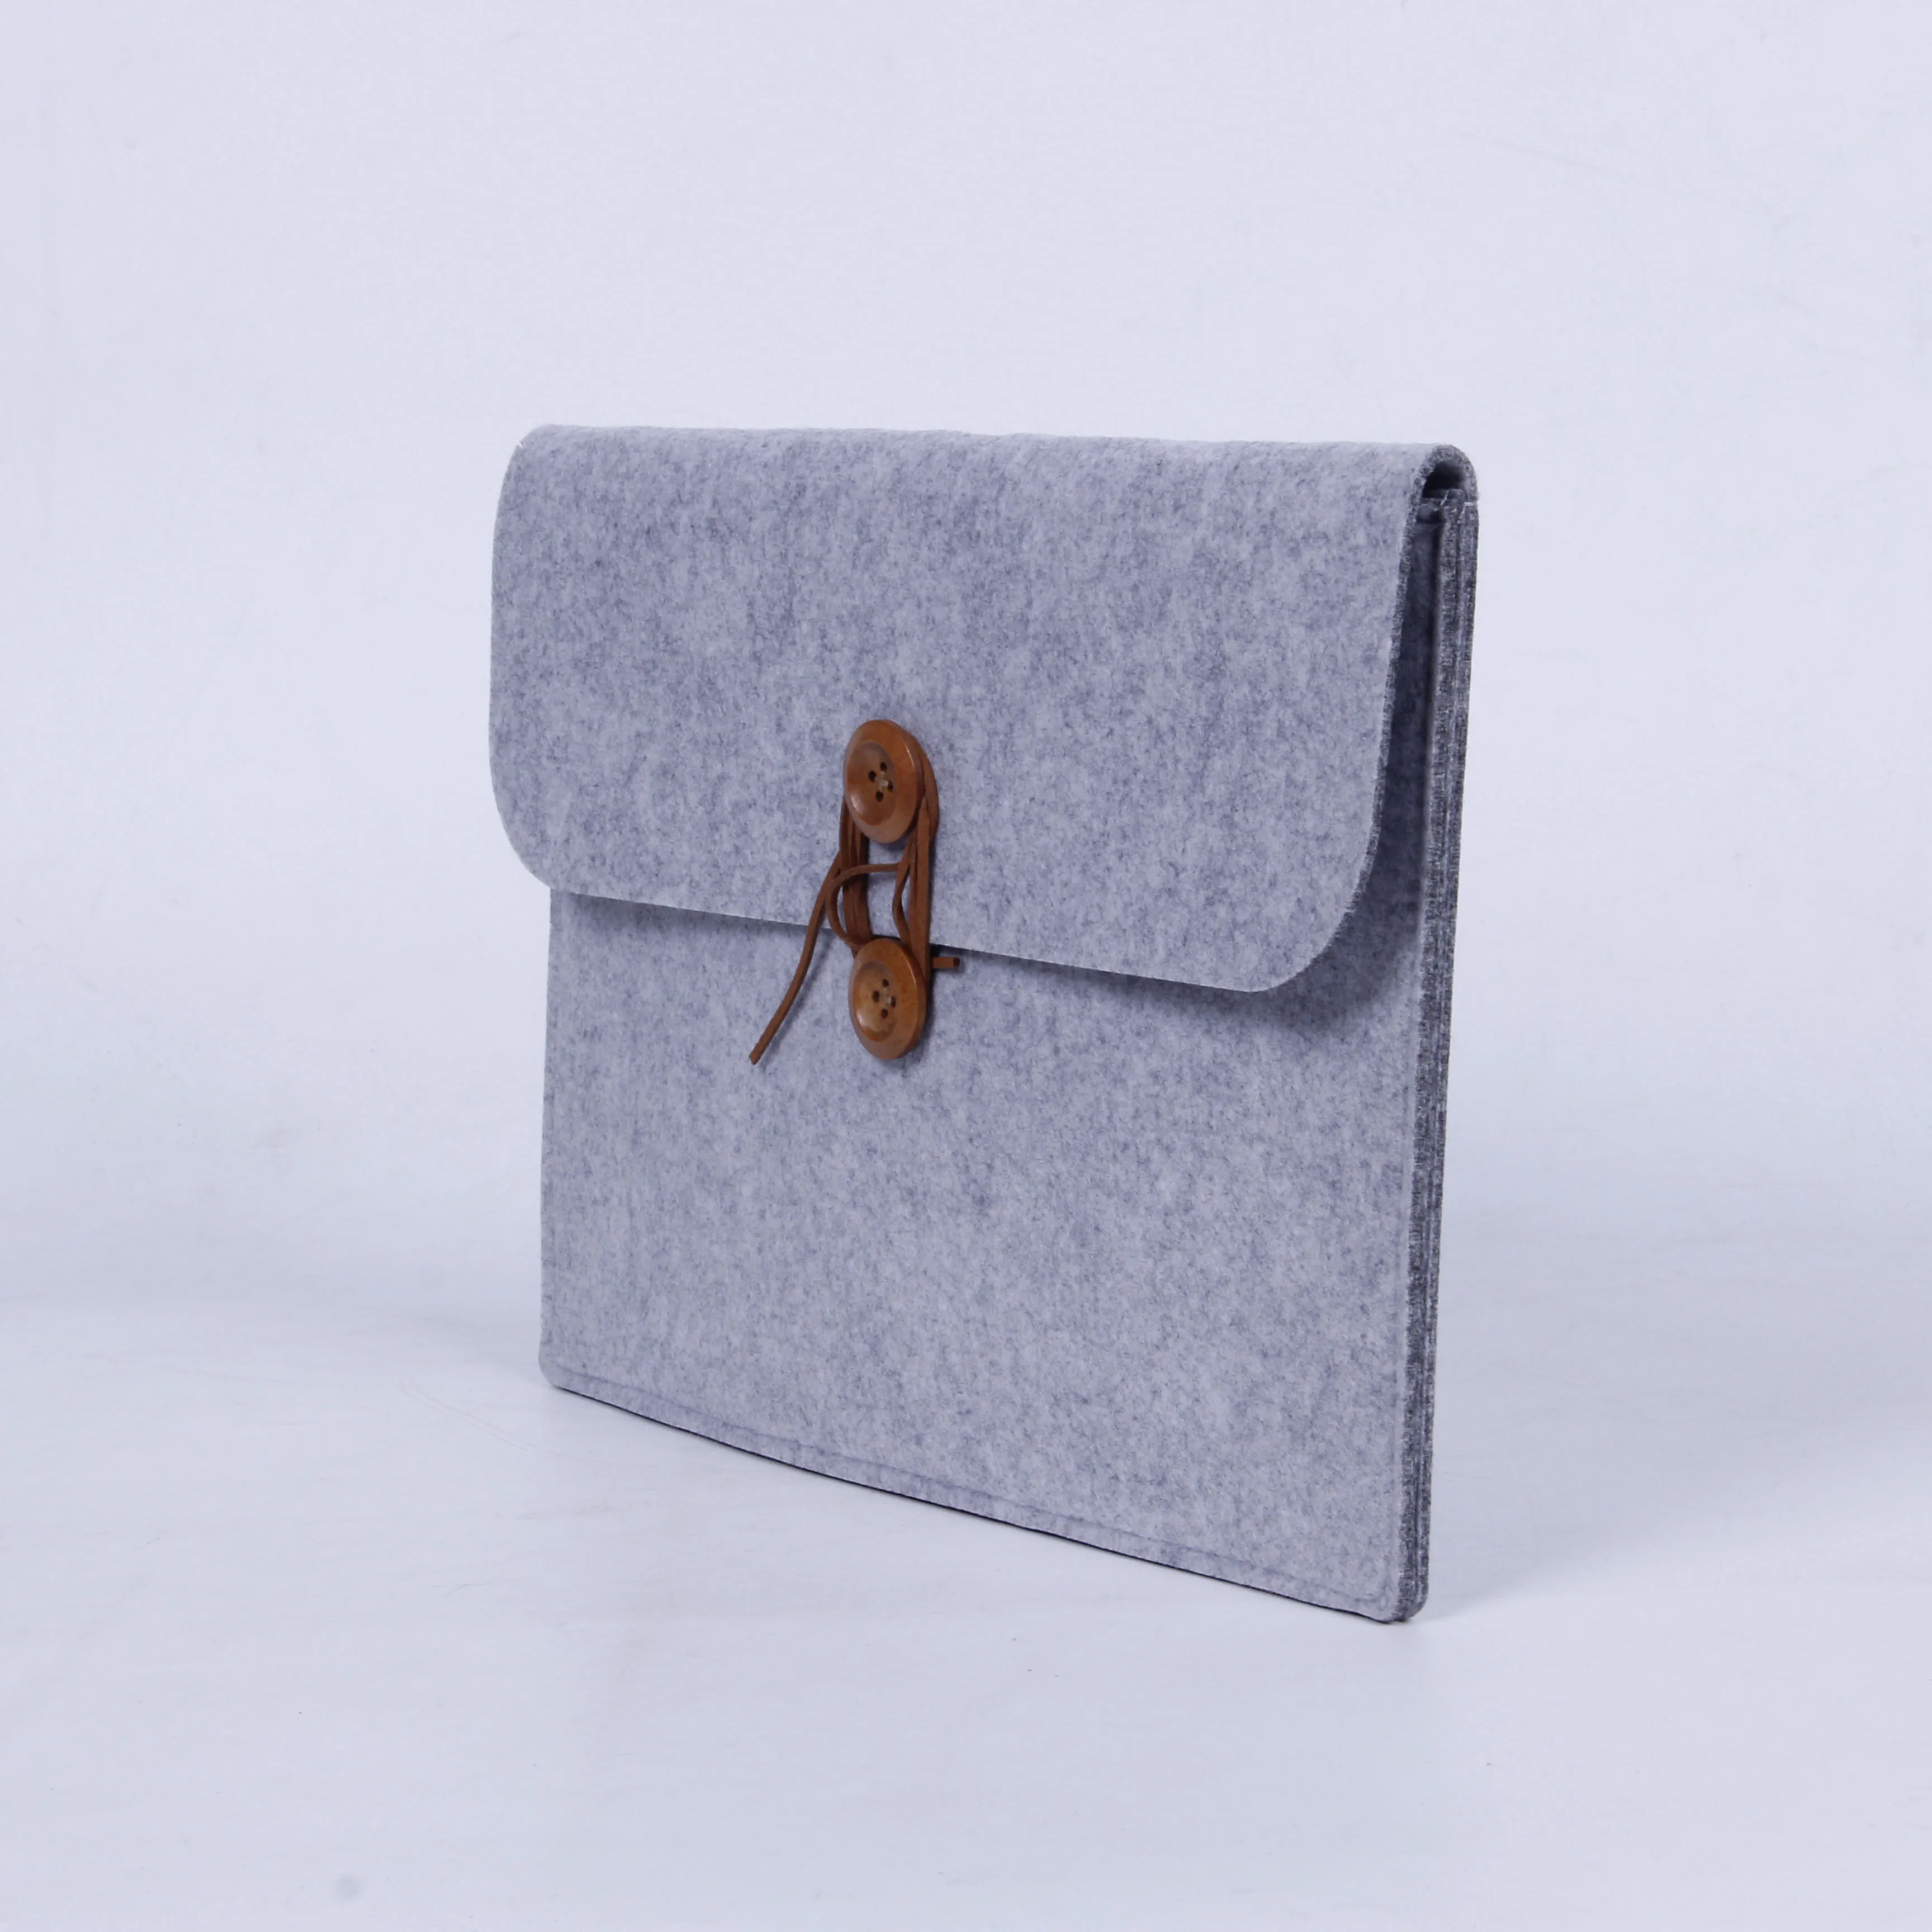 2021 best selling exquisite custom design felt bag business office durable fashion file bag